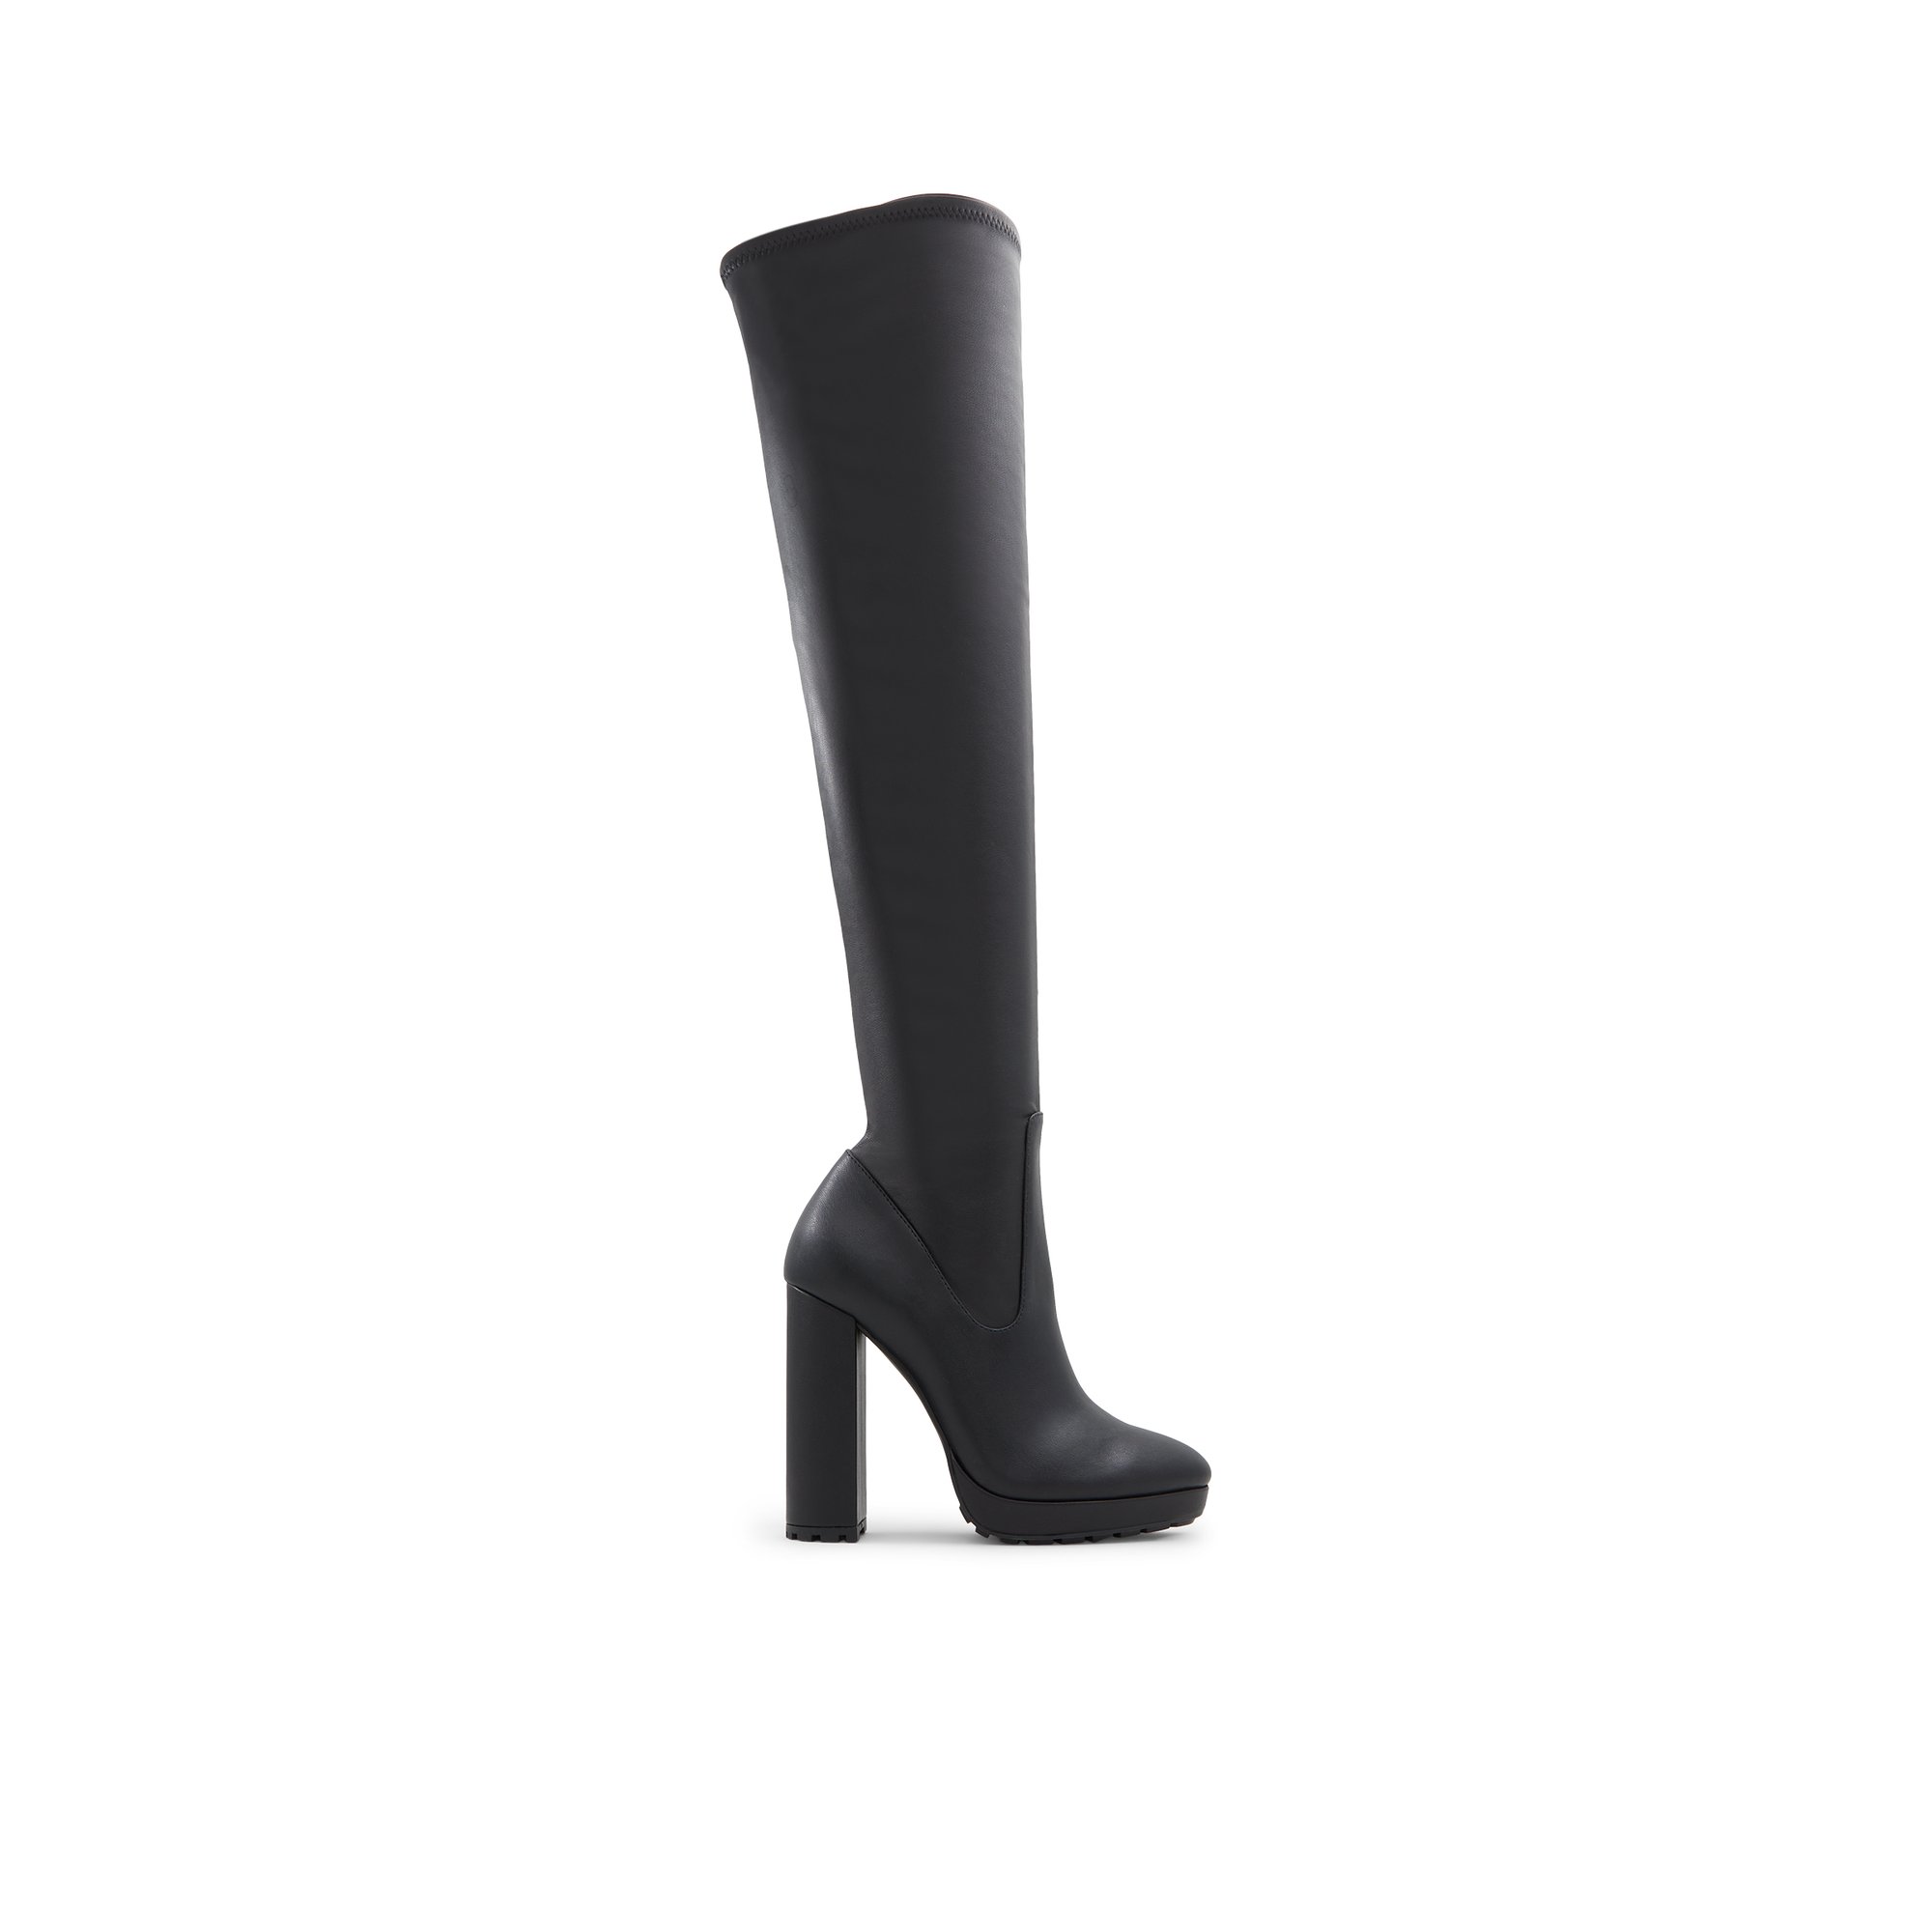 ALDO Dallobrelia - Women's Dress Boot - Black